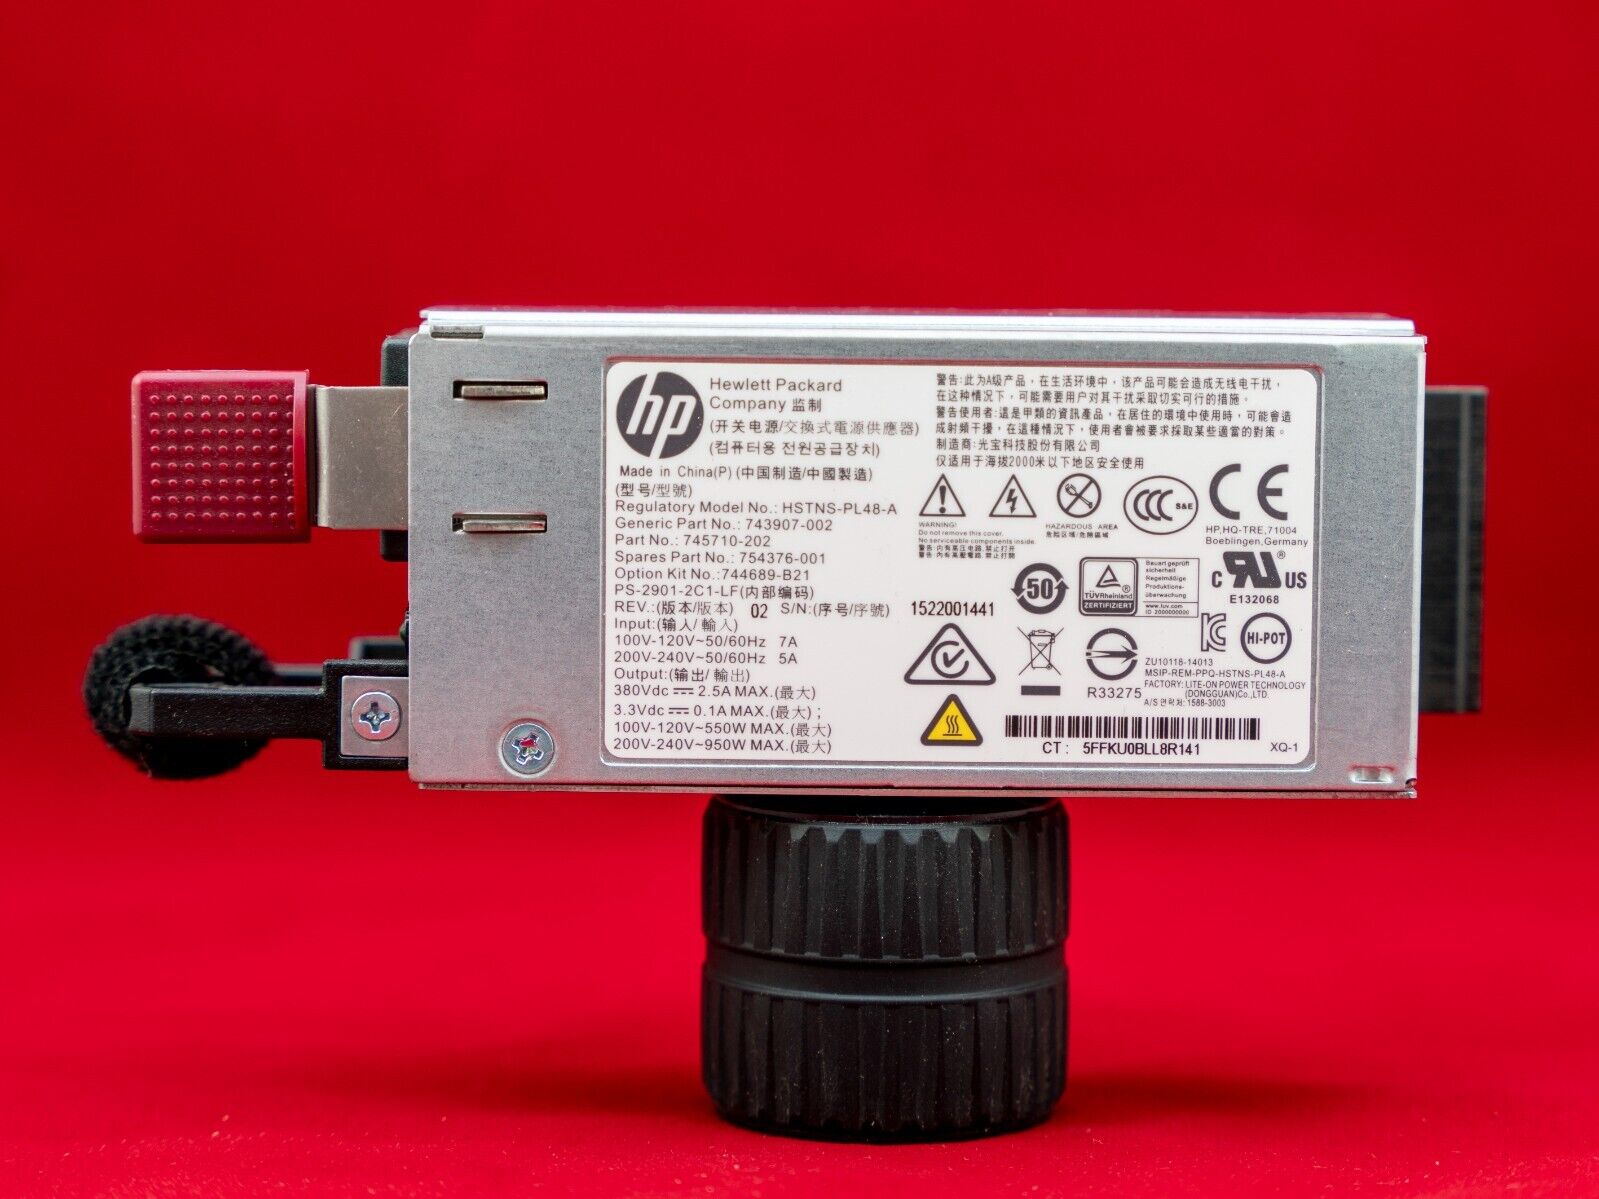 HP DL120 G9/ DL160 G9 800/900W HP Power Supply 754376-001 743907-002 745701-202